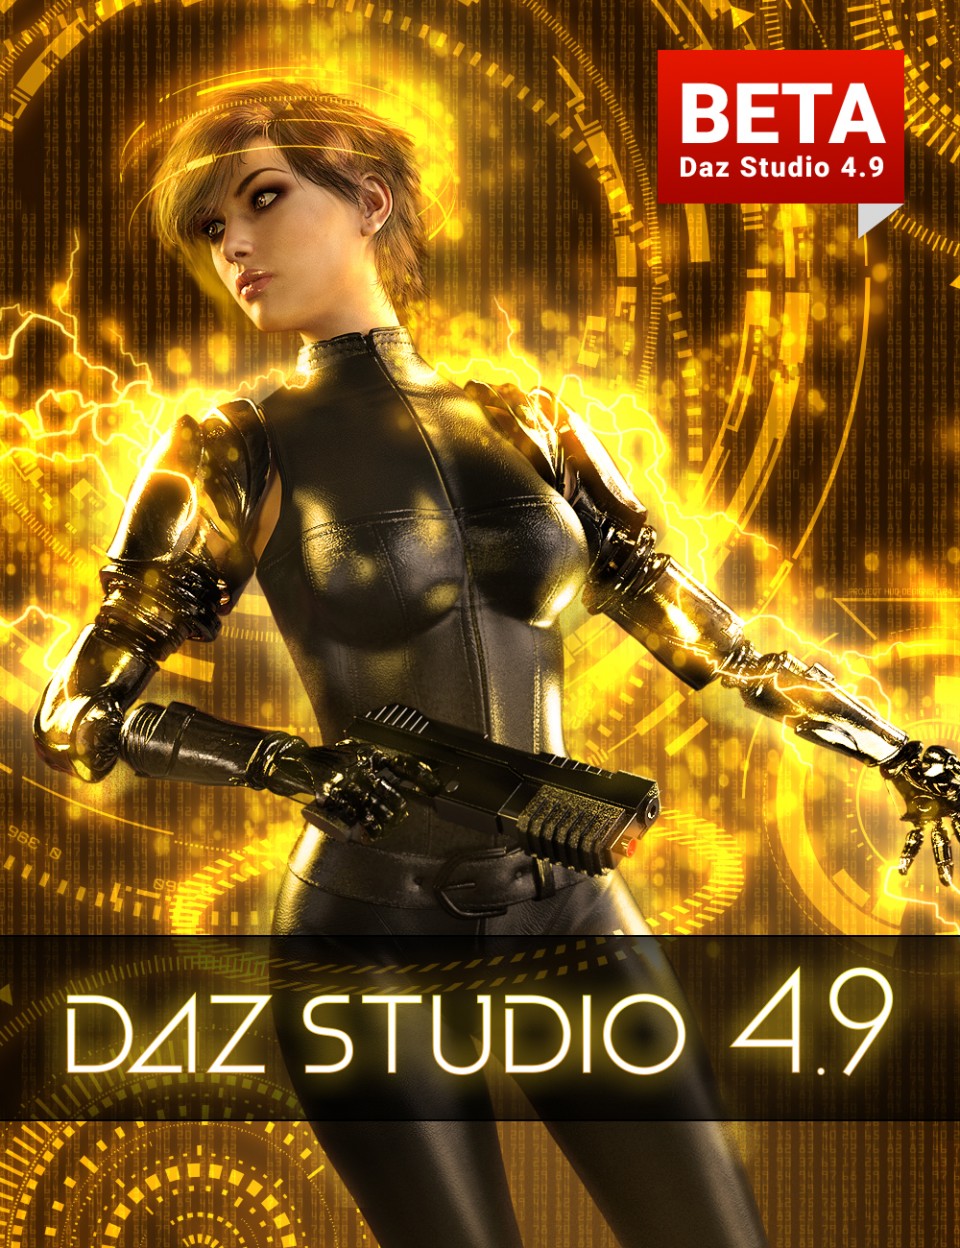 daz_studio_4_9-product-page-image_beta_.jpg